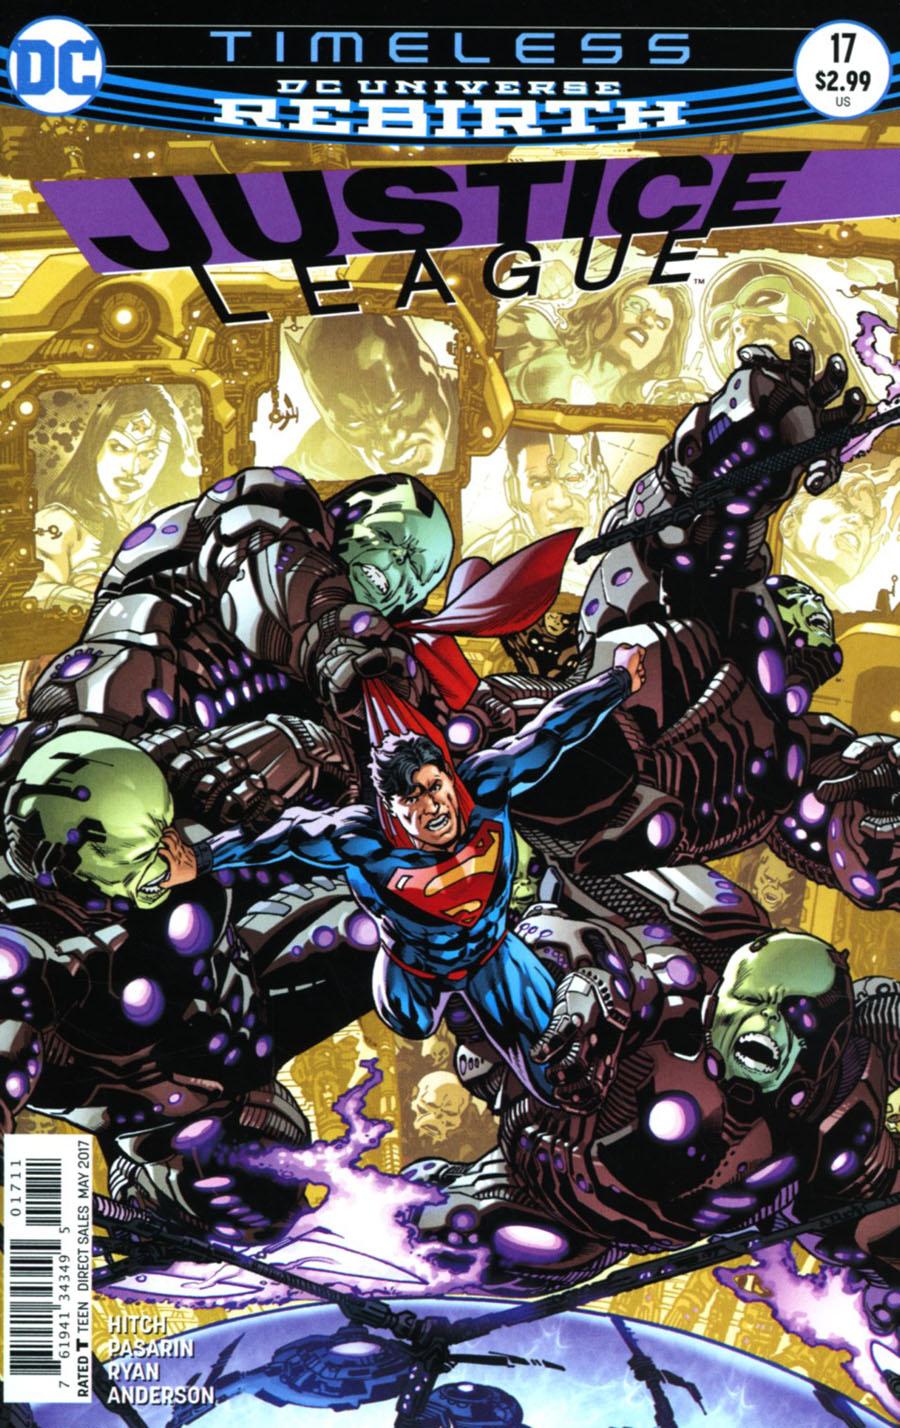 Justice League Vol. 3 #17